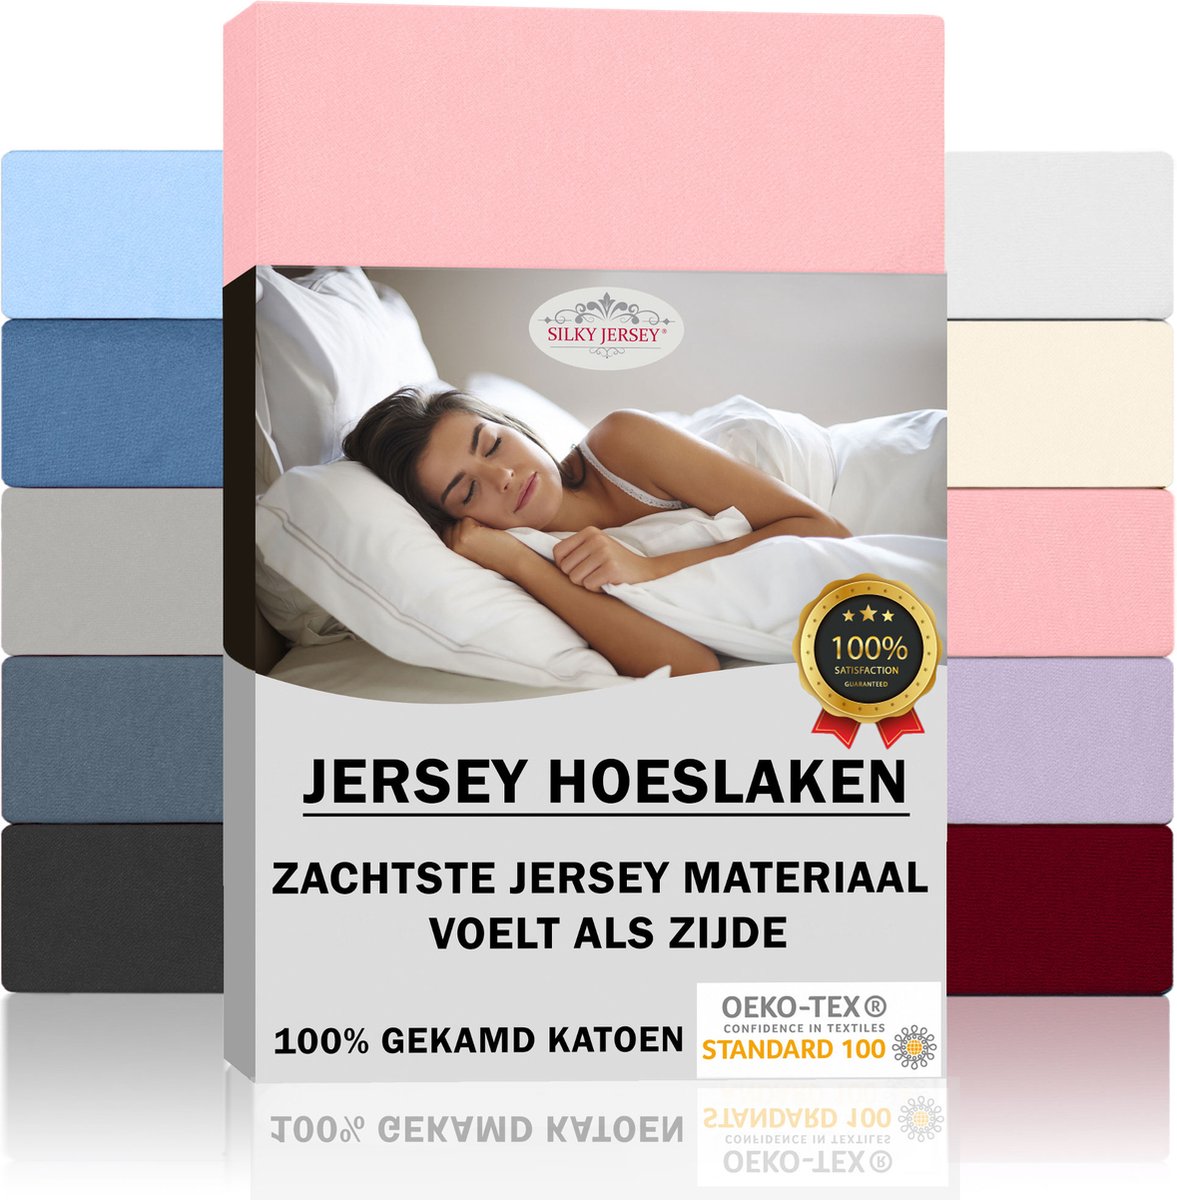 Silky Jersey Zijdezachte Jersey Hoeslaken Strijkvrij 100% Gekamd Katoen - 180x200+30 cm Roze